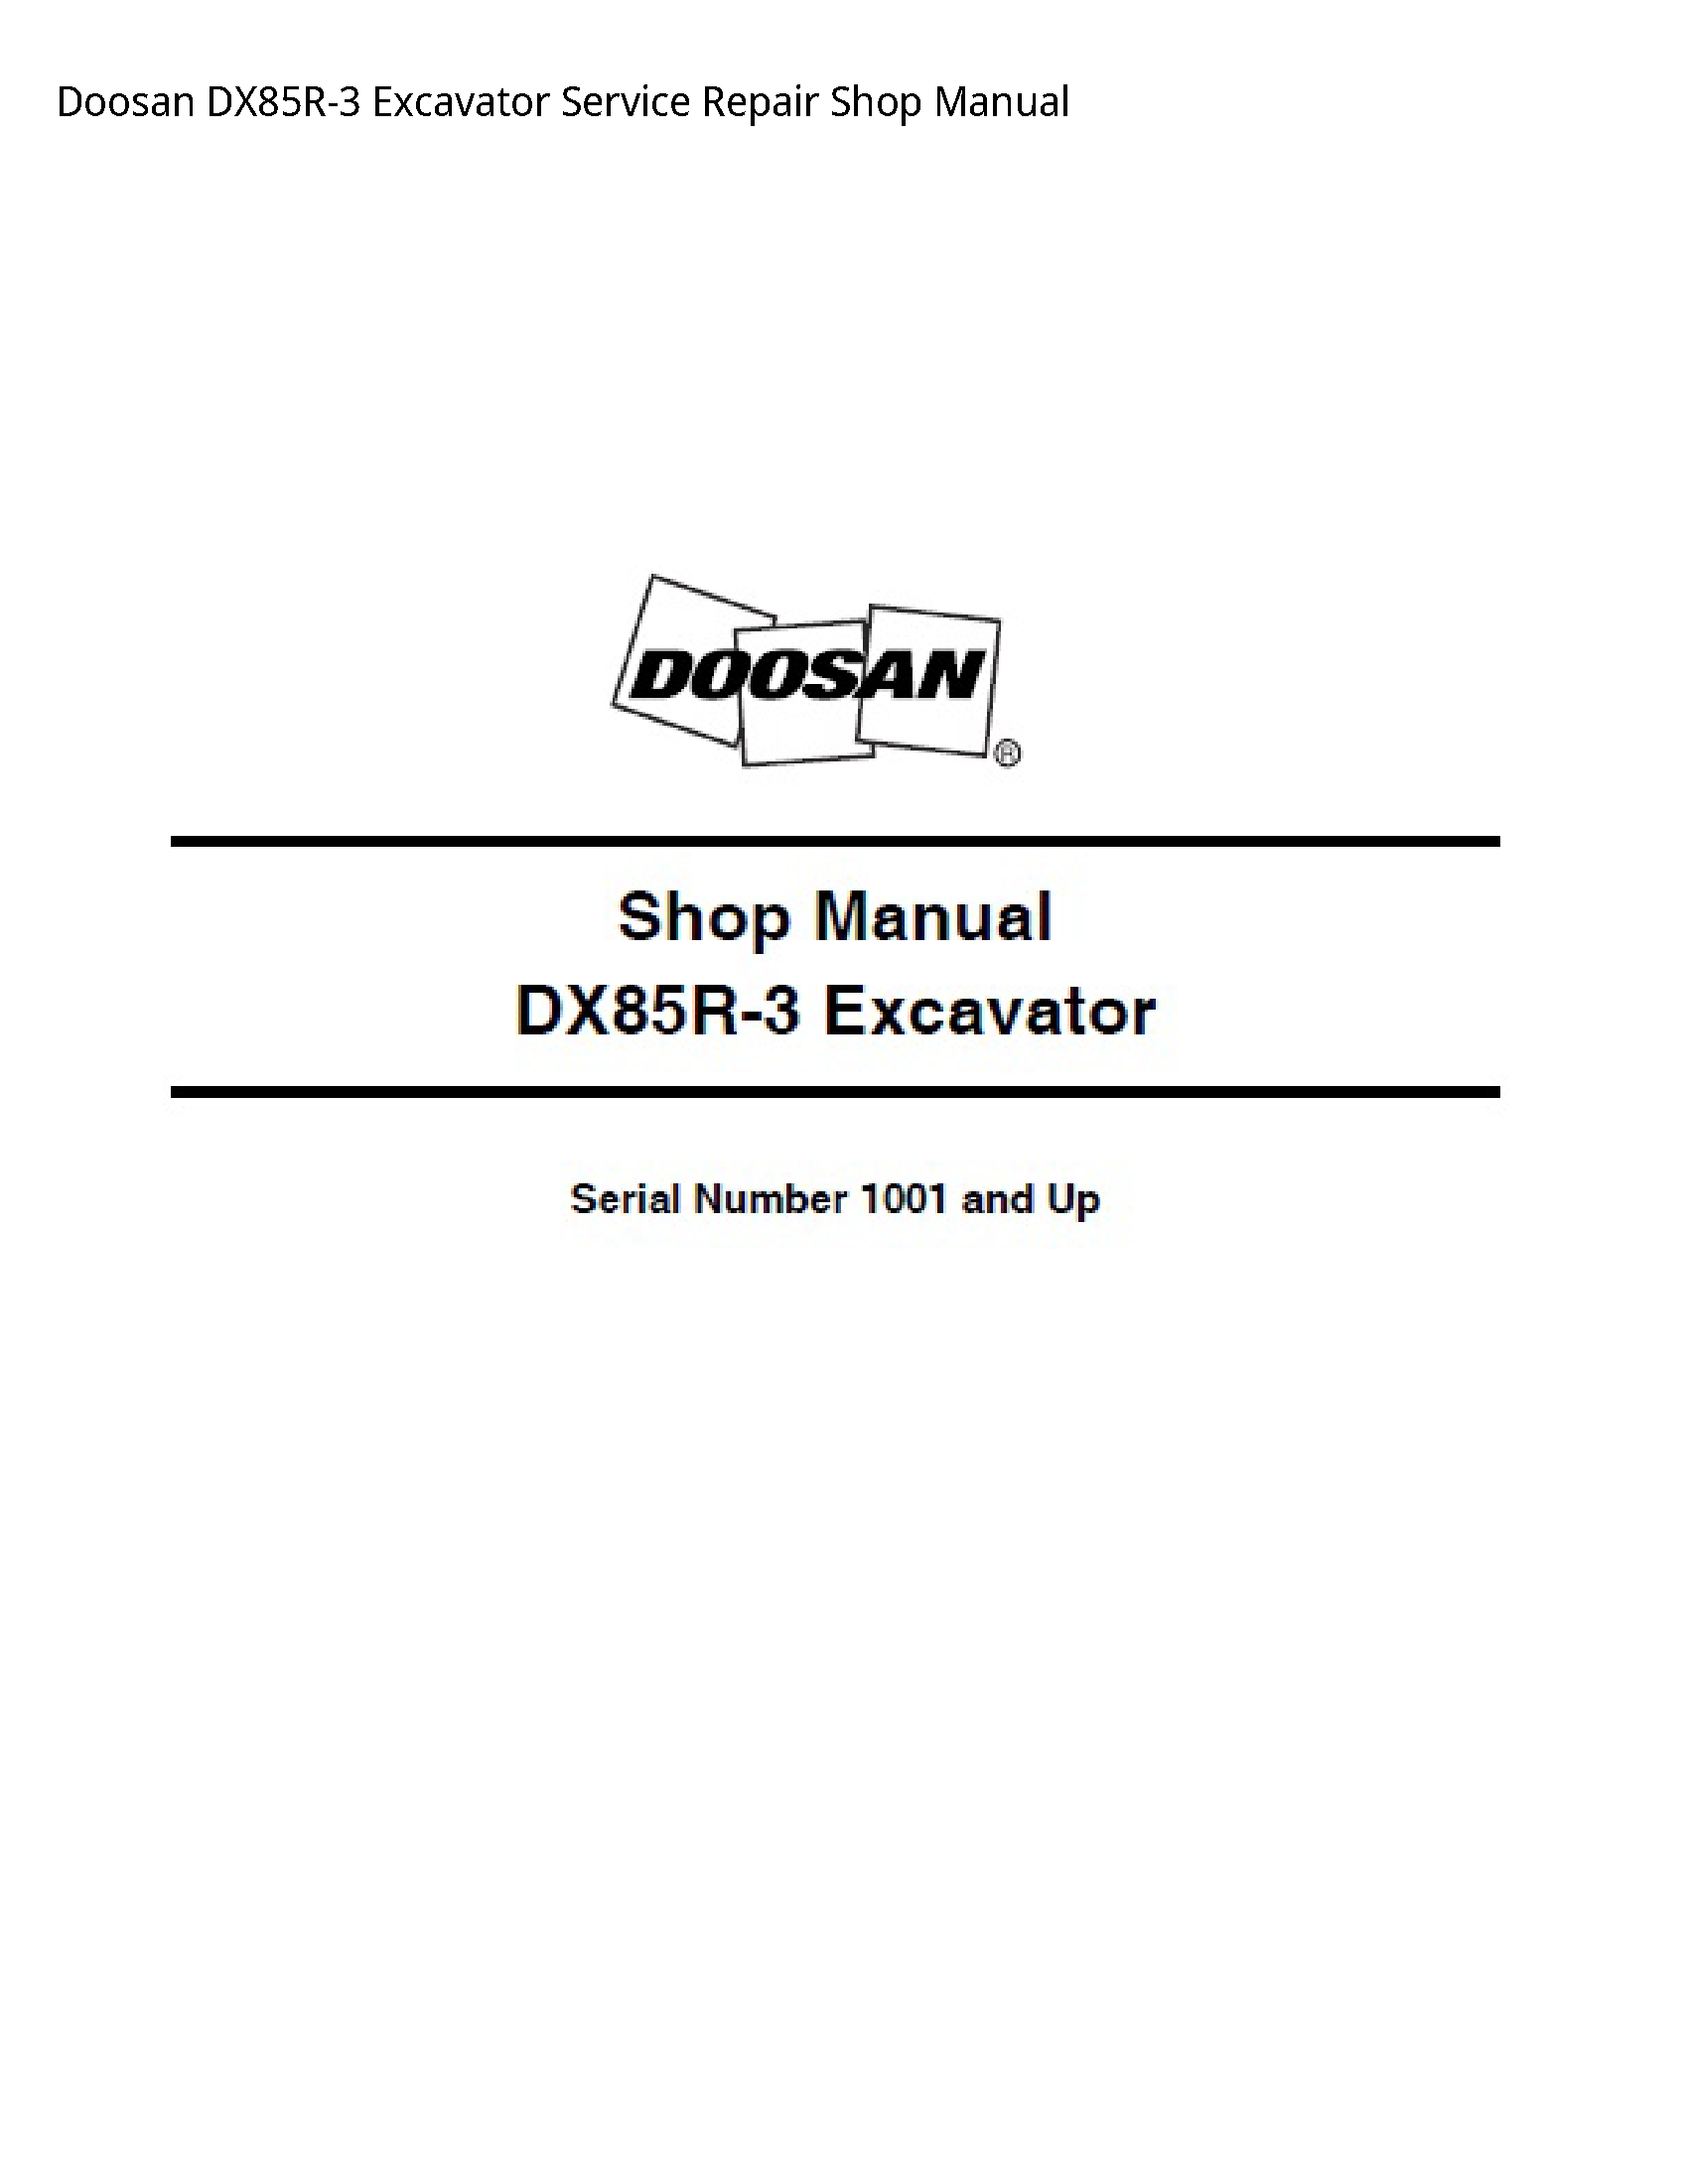 Doosan DX85R-3 Excavator manual